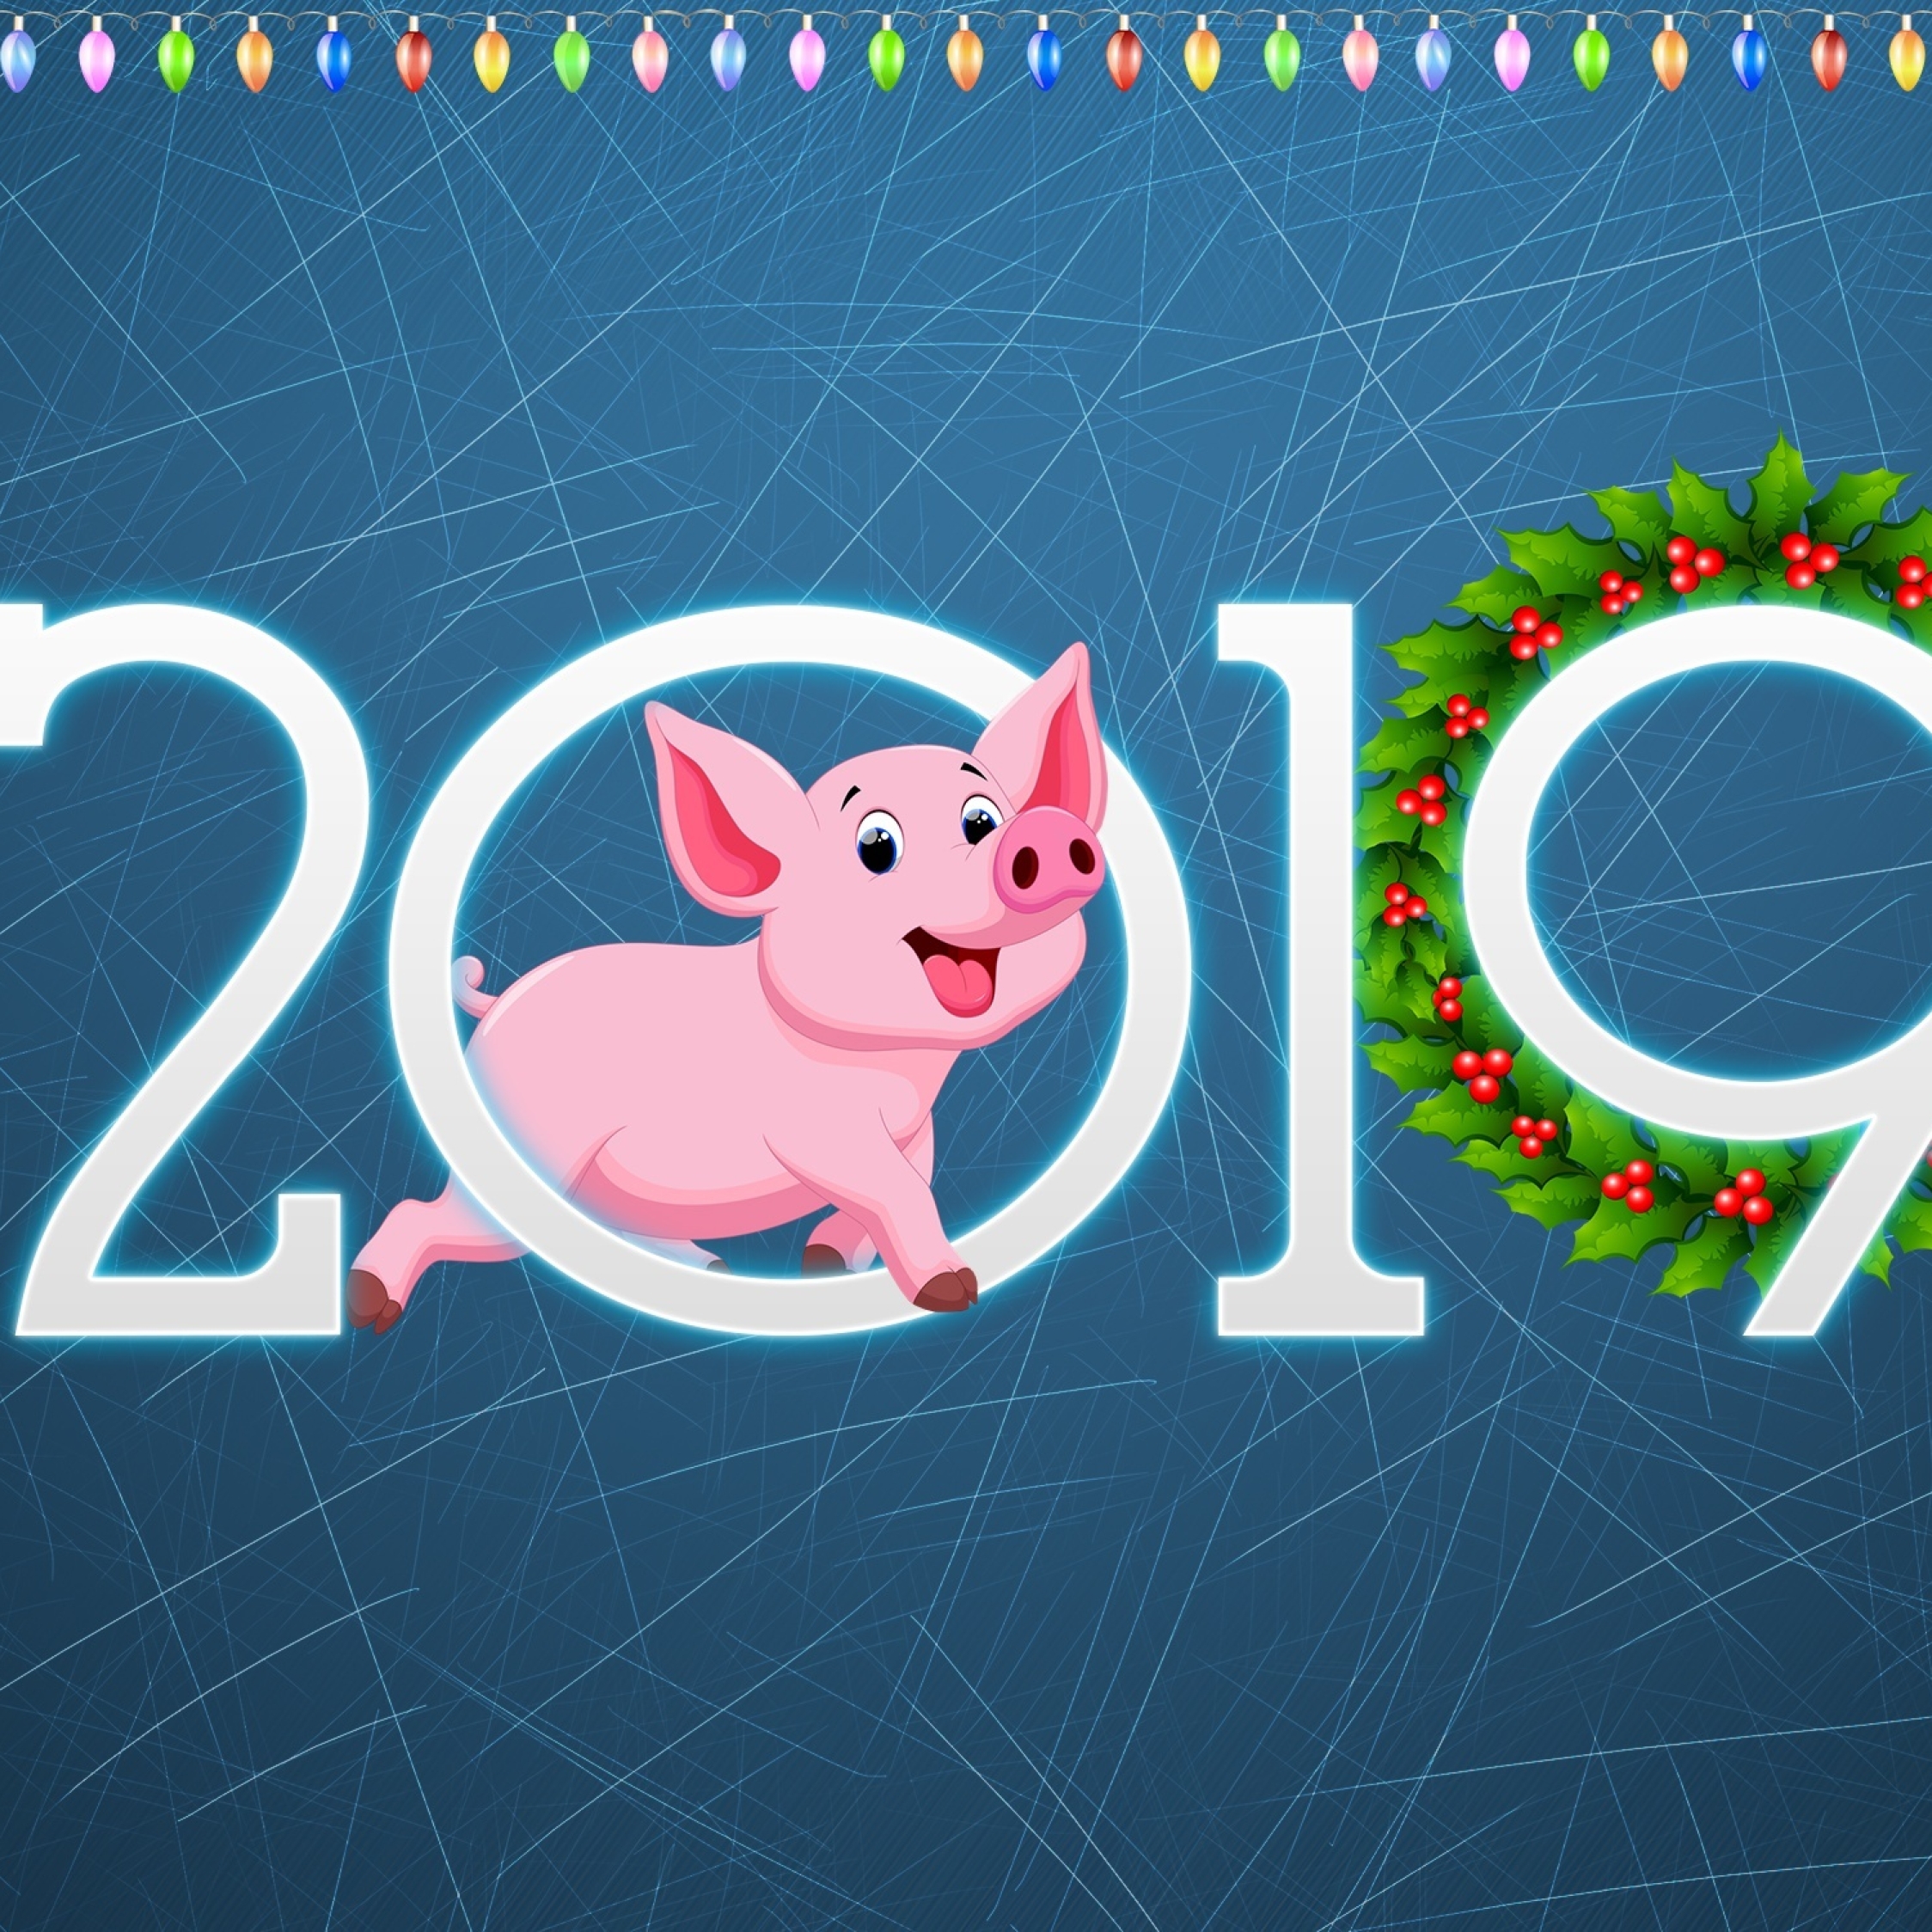 2248x2248 Peppa Pig 2019 Year 2248x2248 Resolution ...